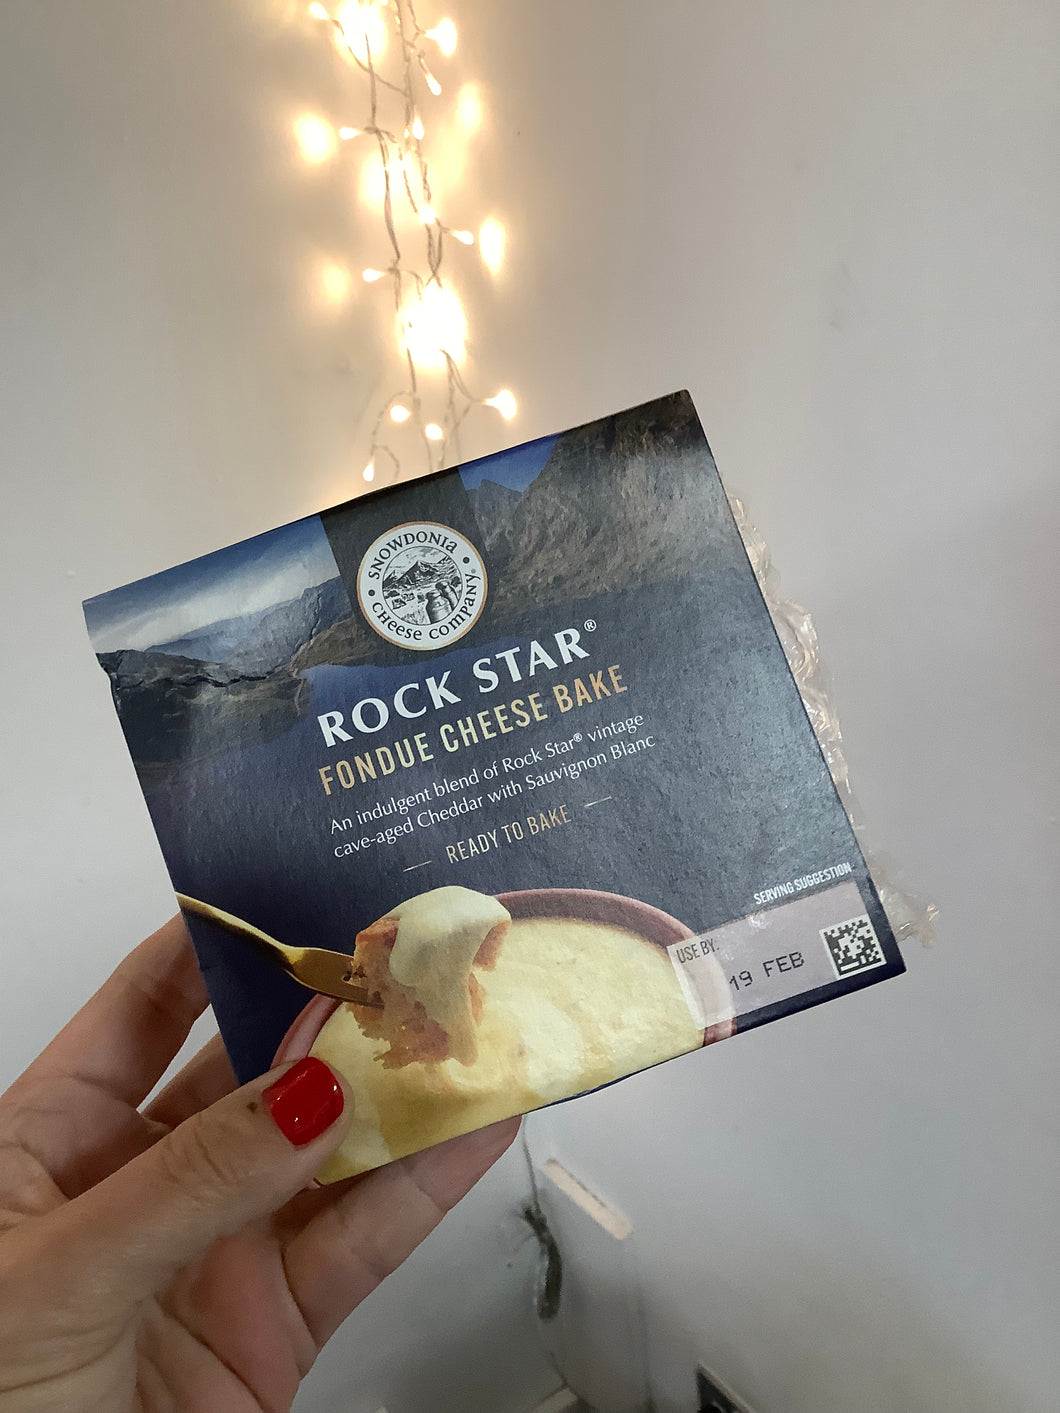 Snowdonia Rock Star Fondue Cheese Bake 150g